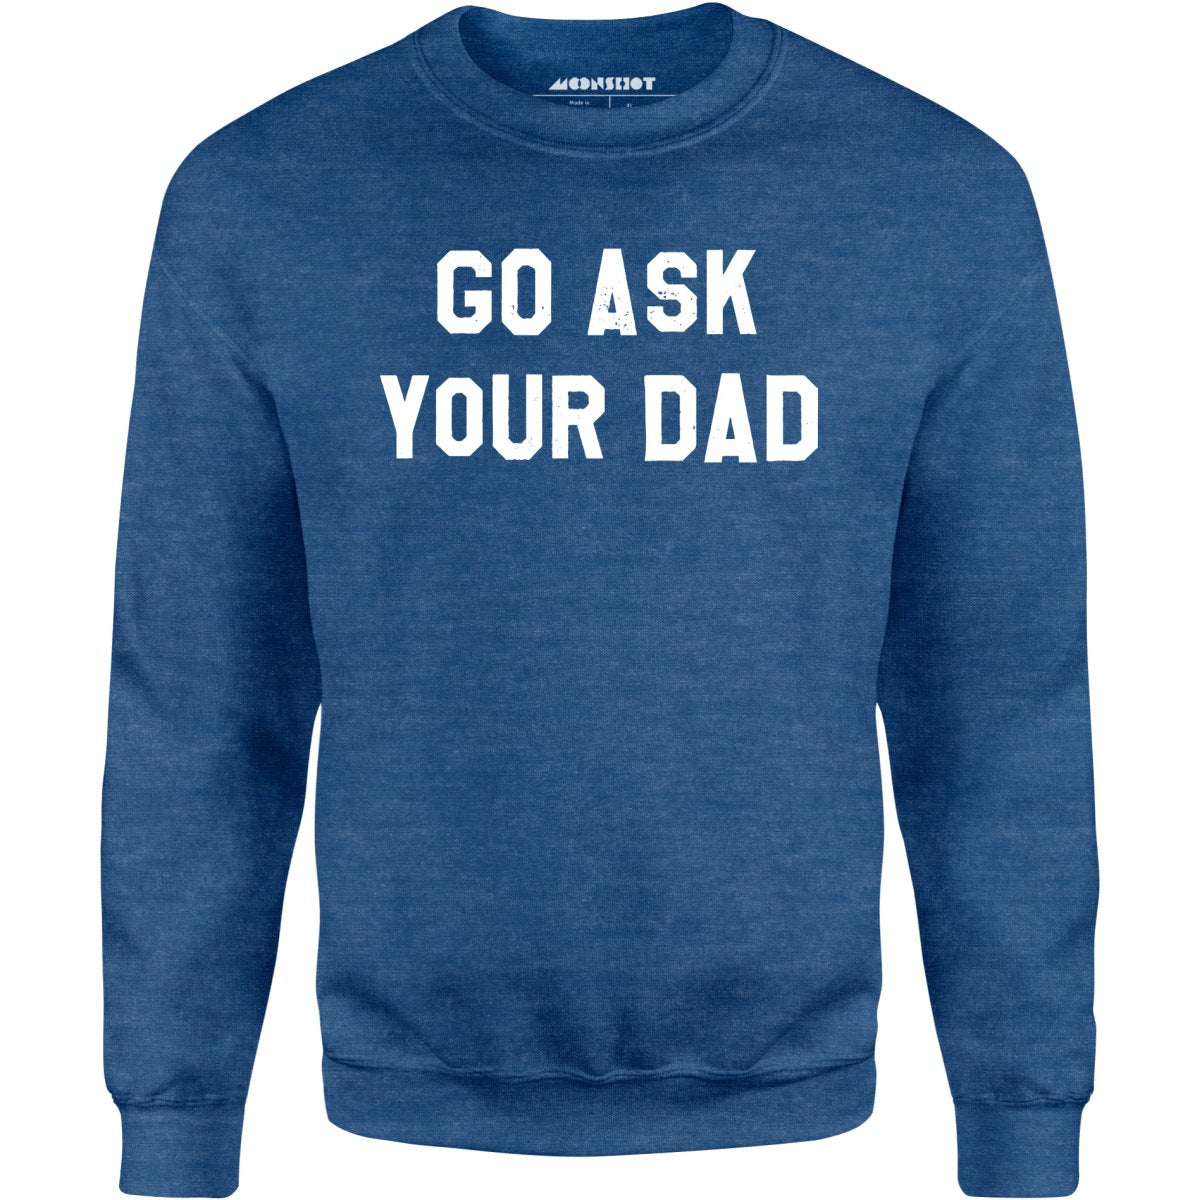 Go Ask Your Dad - Unisex Sweatshirt